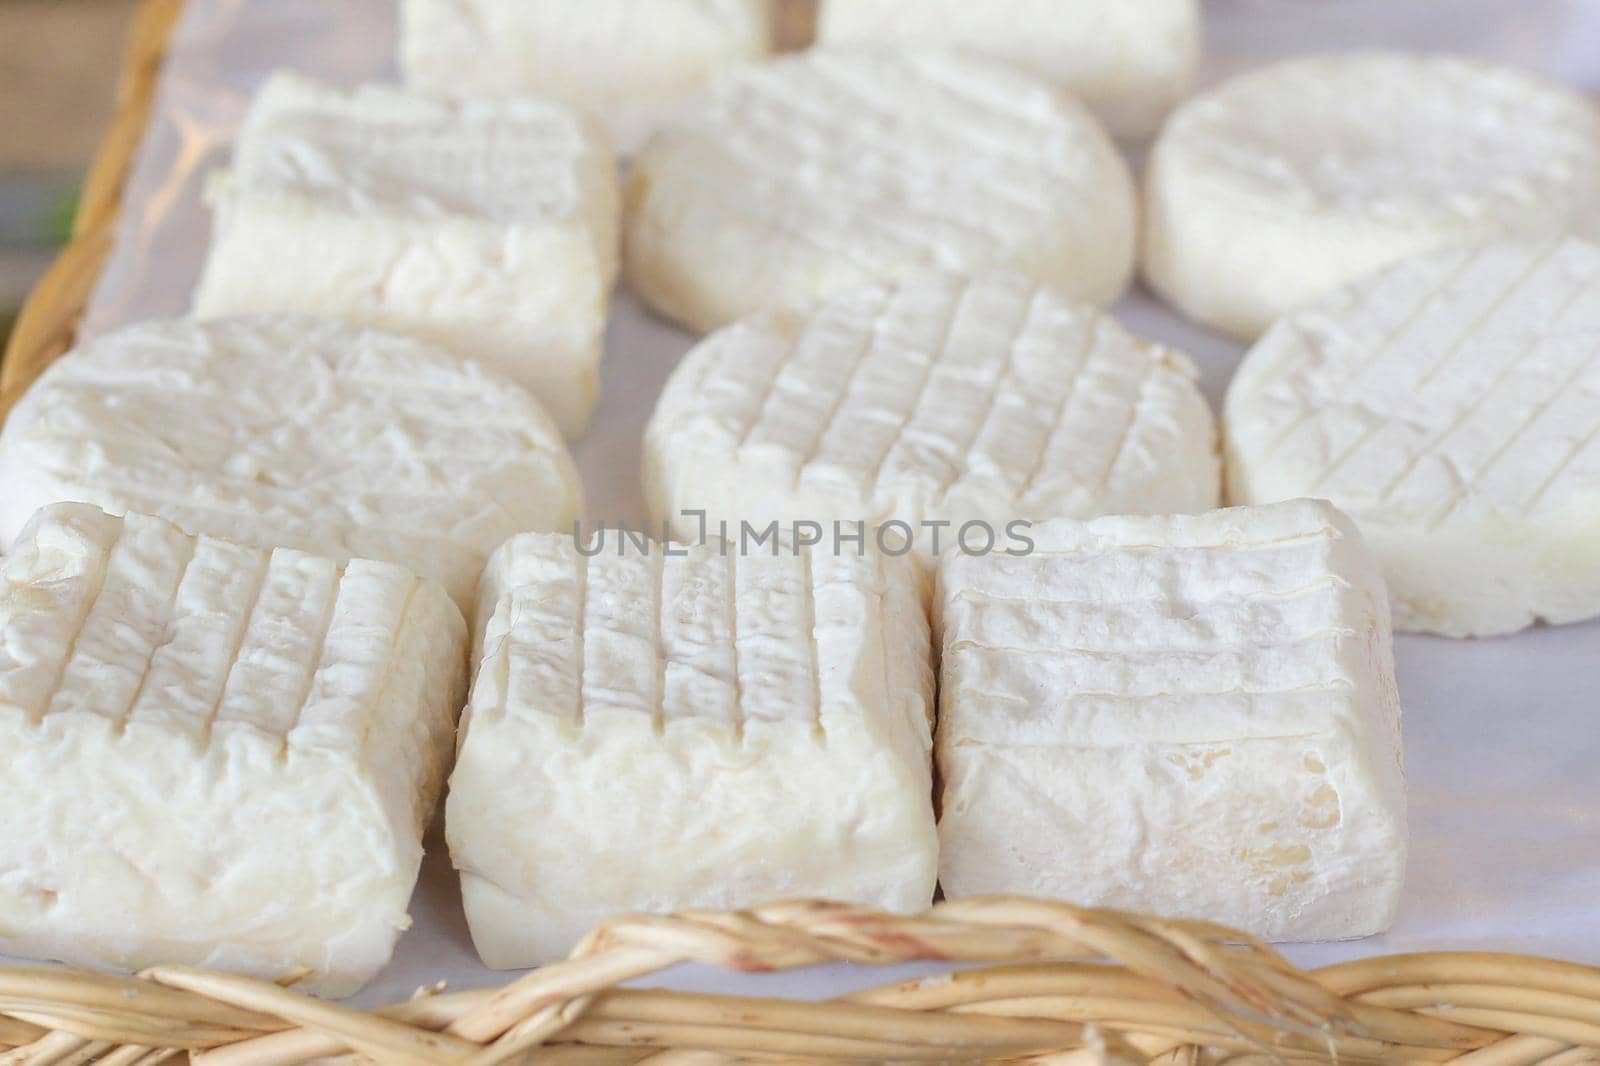 fresh goat homemade cheese at the market, closeup photo